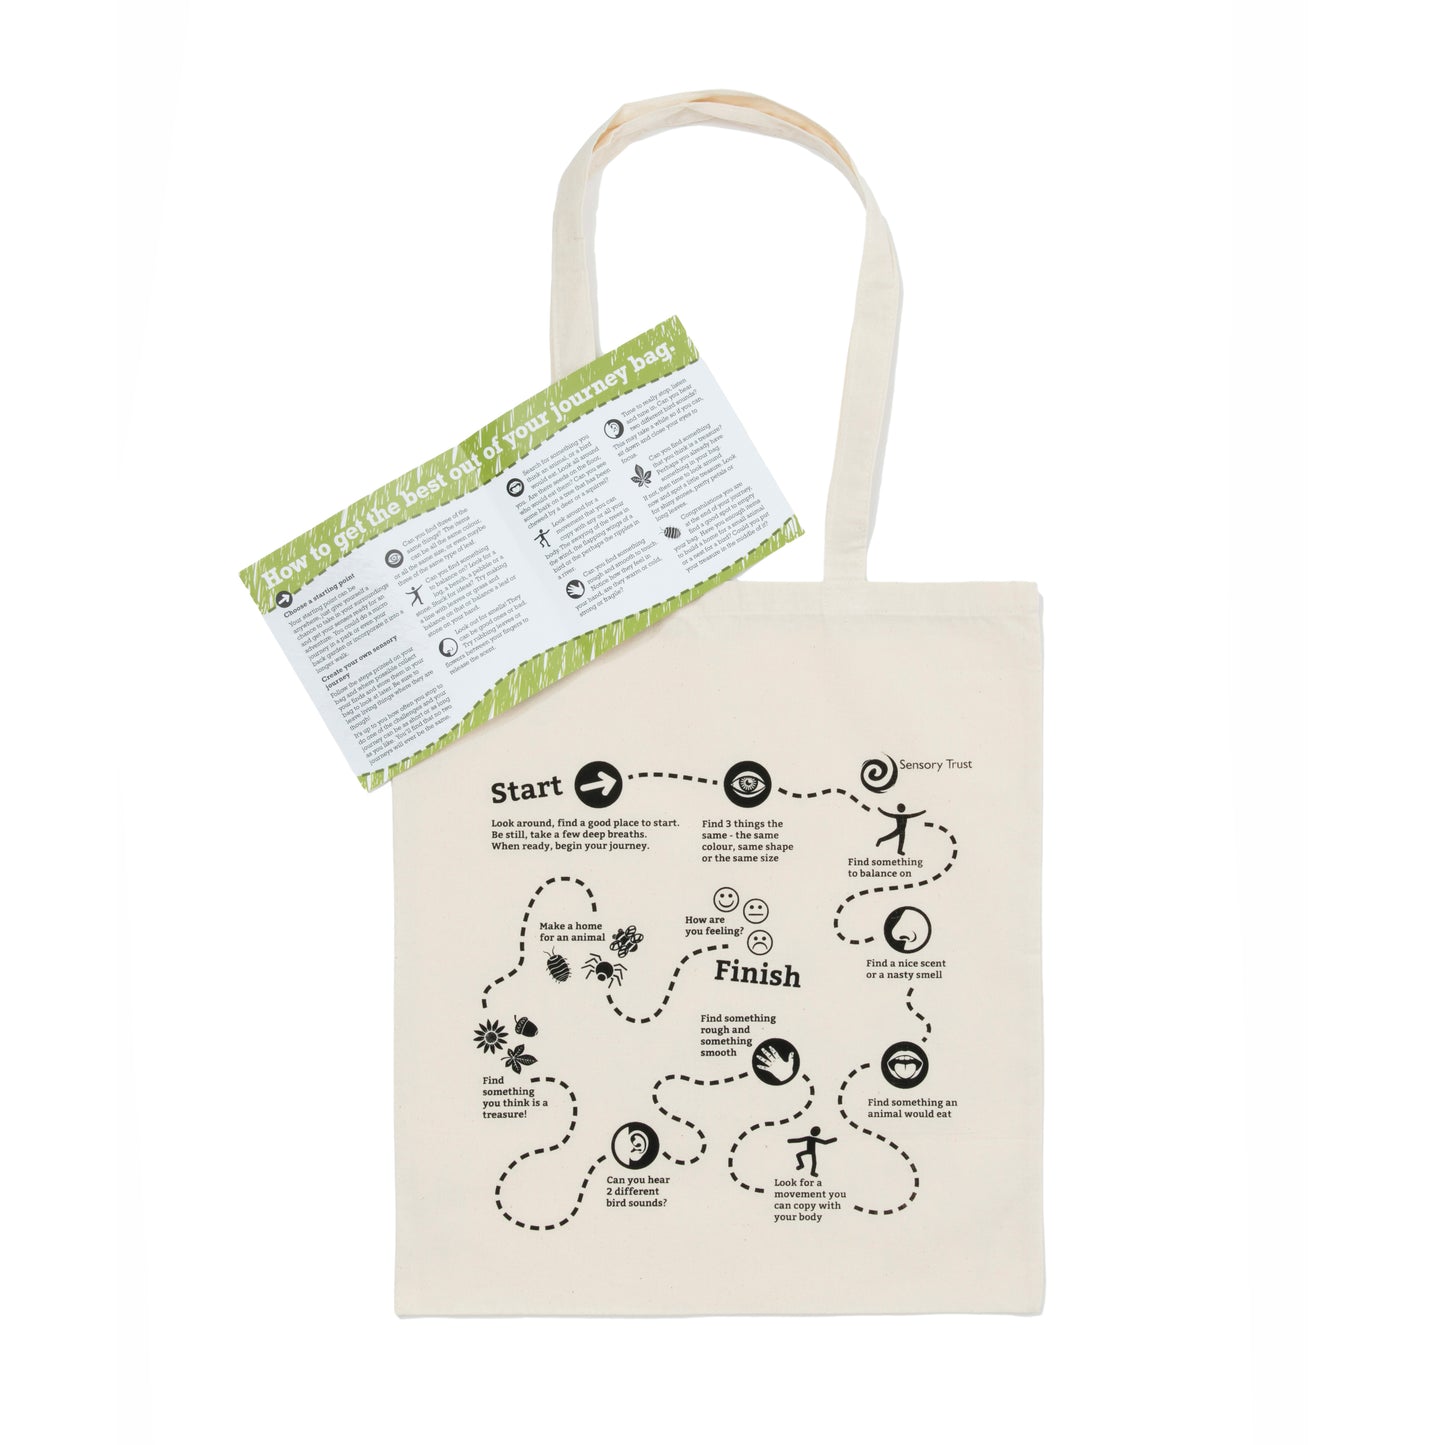 Nature Journey bag and instruction leaflet on white background